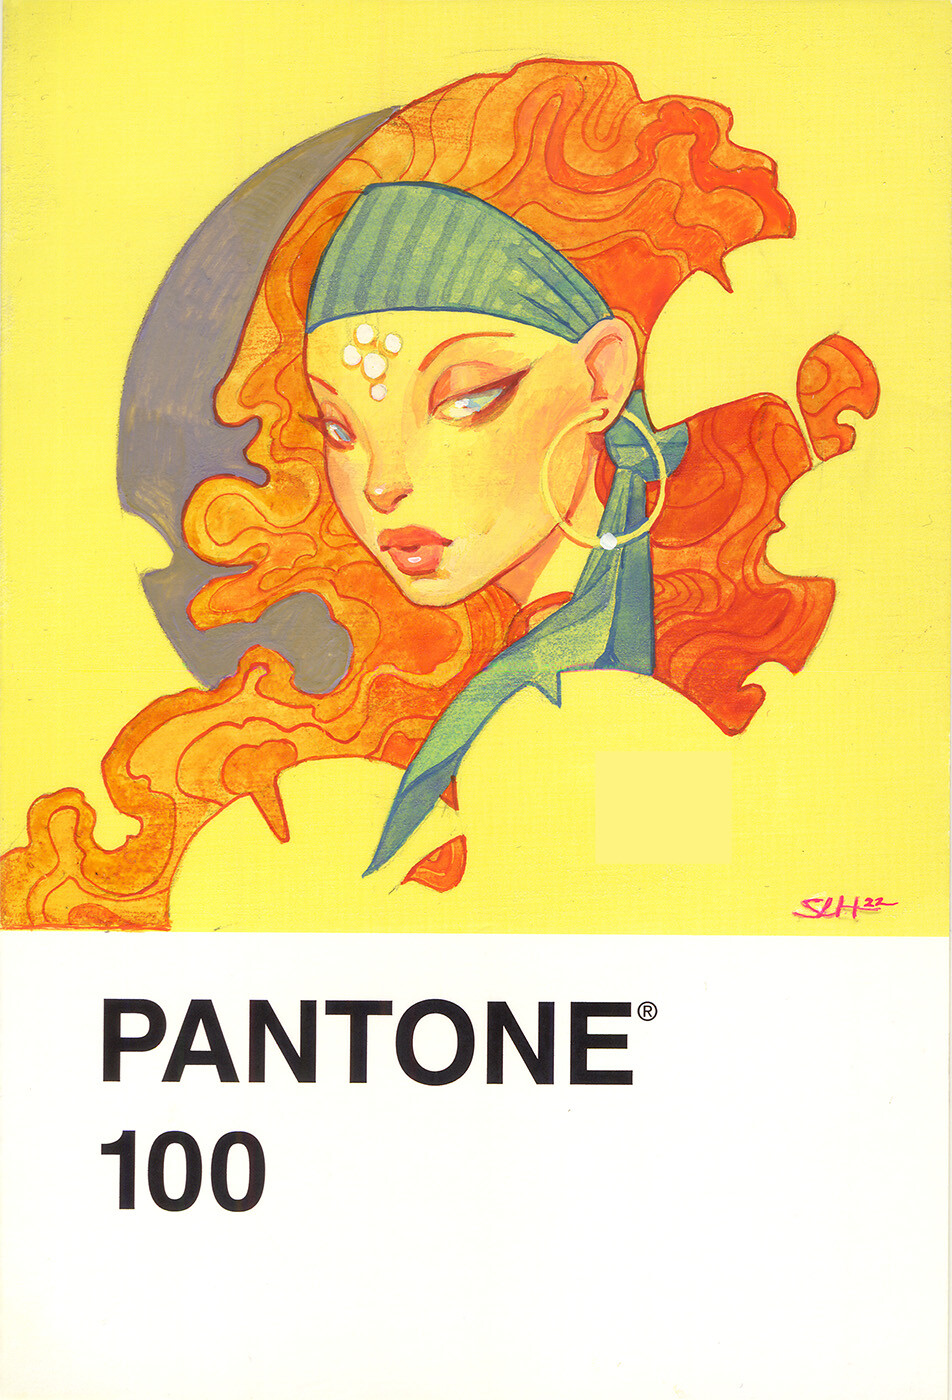 Pantone Postcard Painting Challenge 1-5 